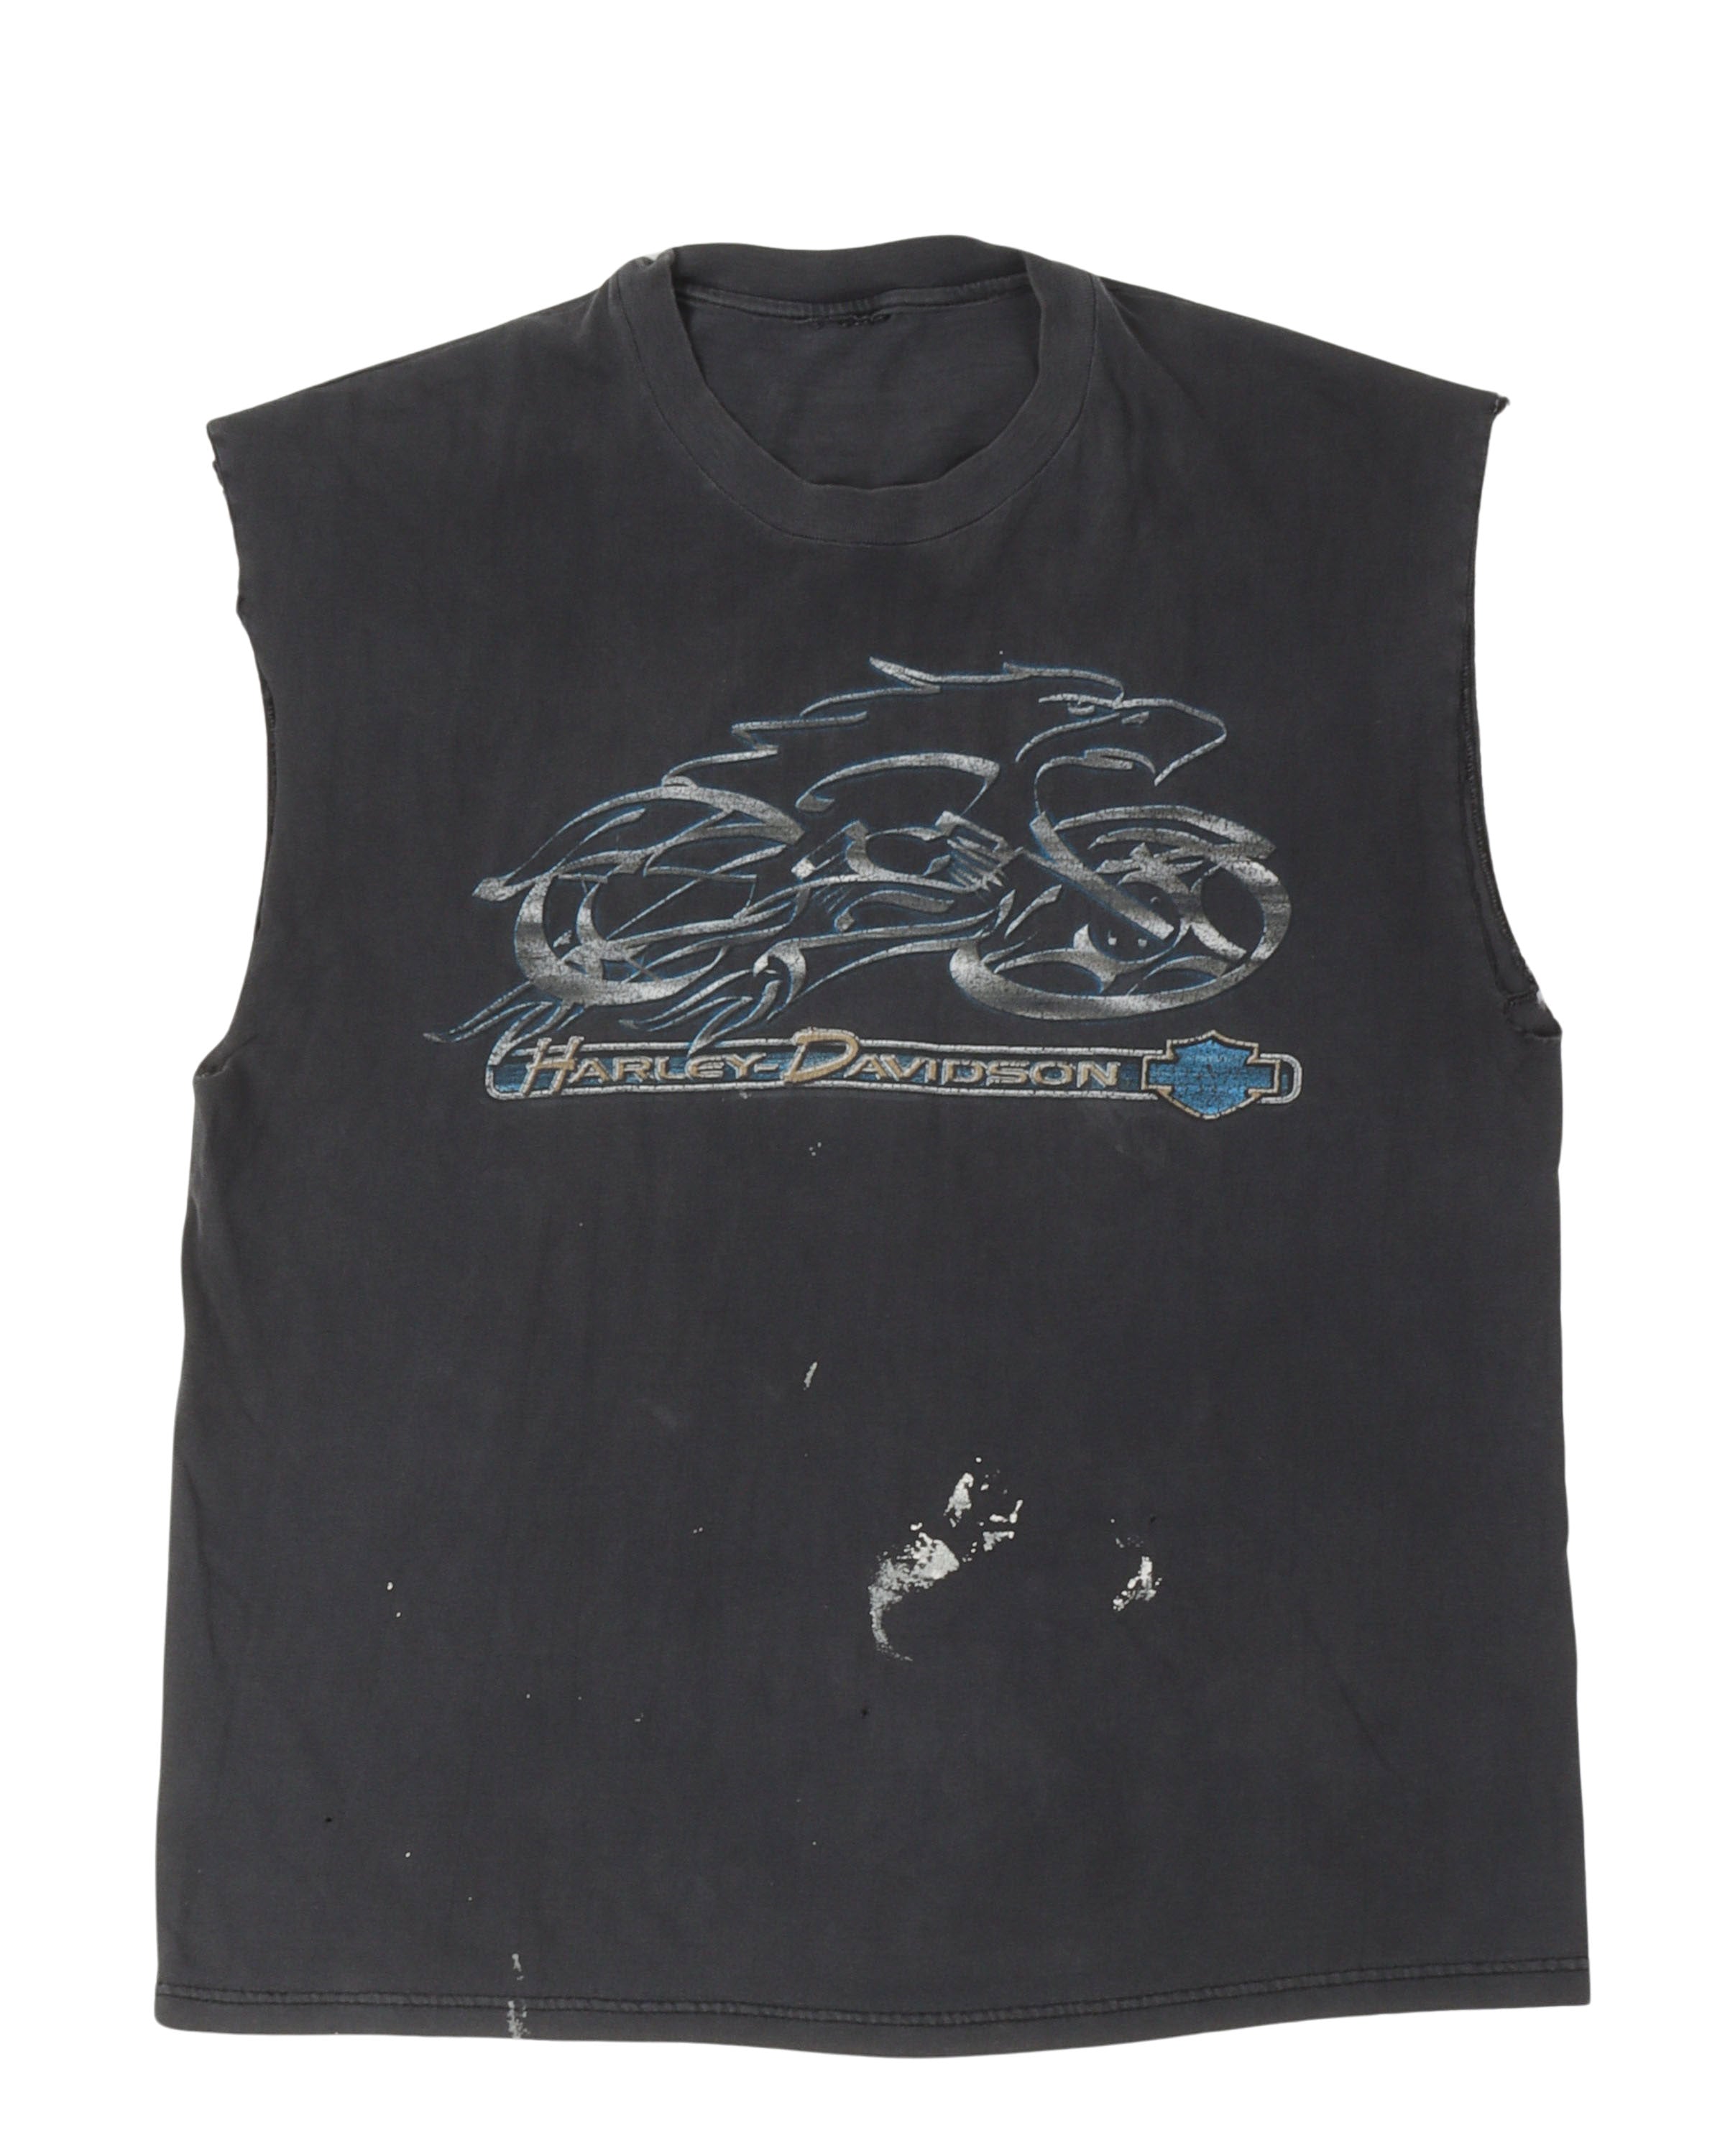 Harley Davidson Cutoff T-Shirt